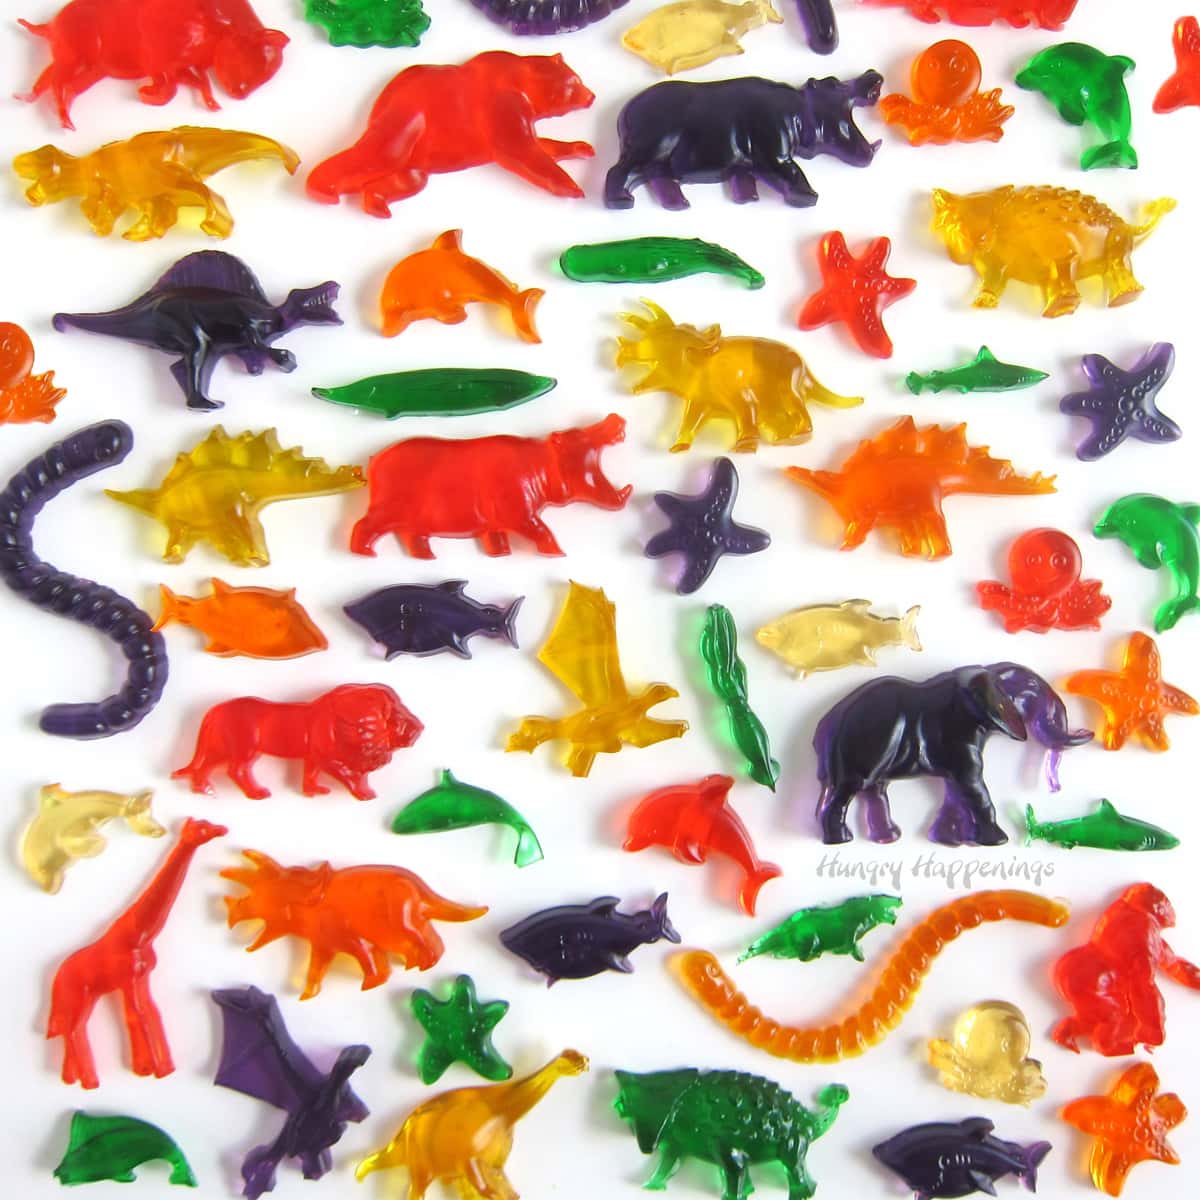 homemade gummy worms, sharks, fish, elephant, dinosaurs, starfish, hippos, lions, giraffe, bears, and more